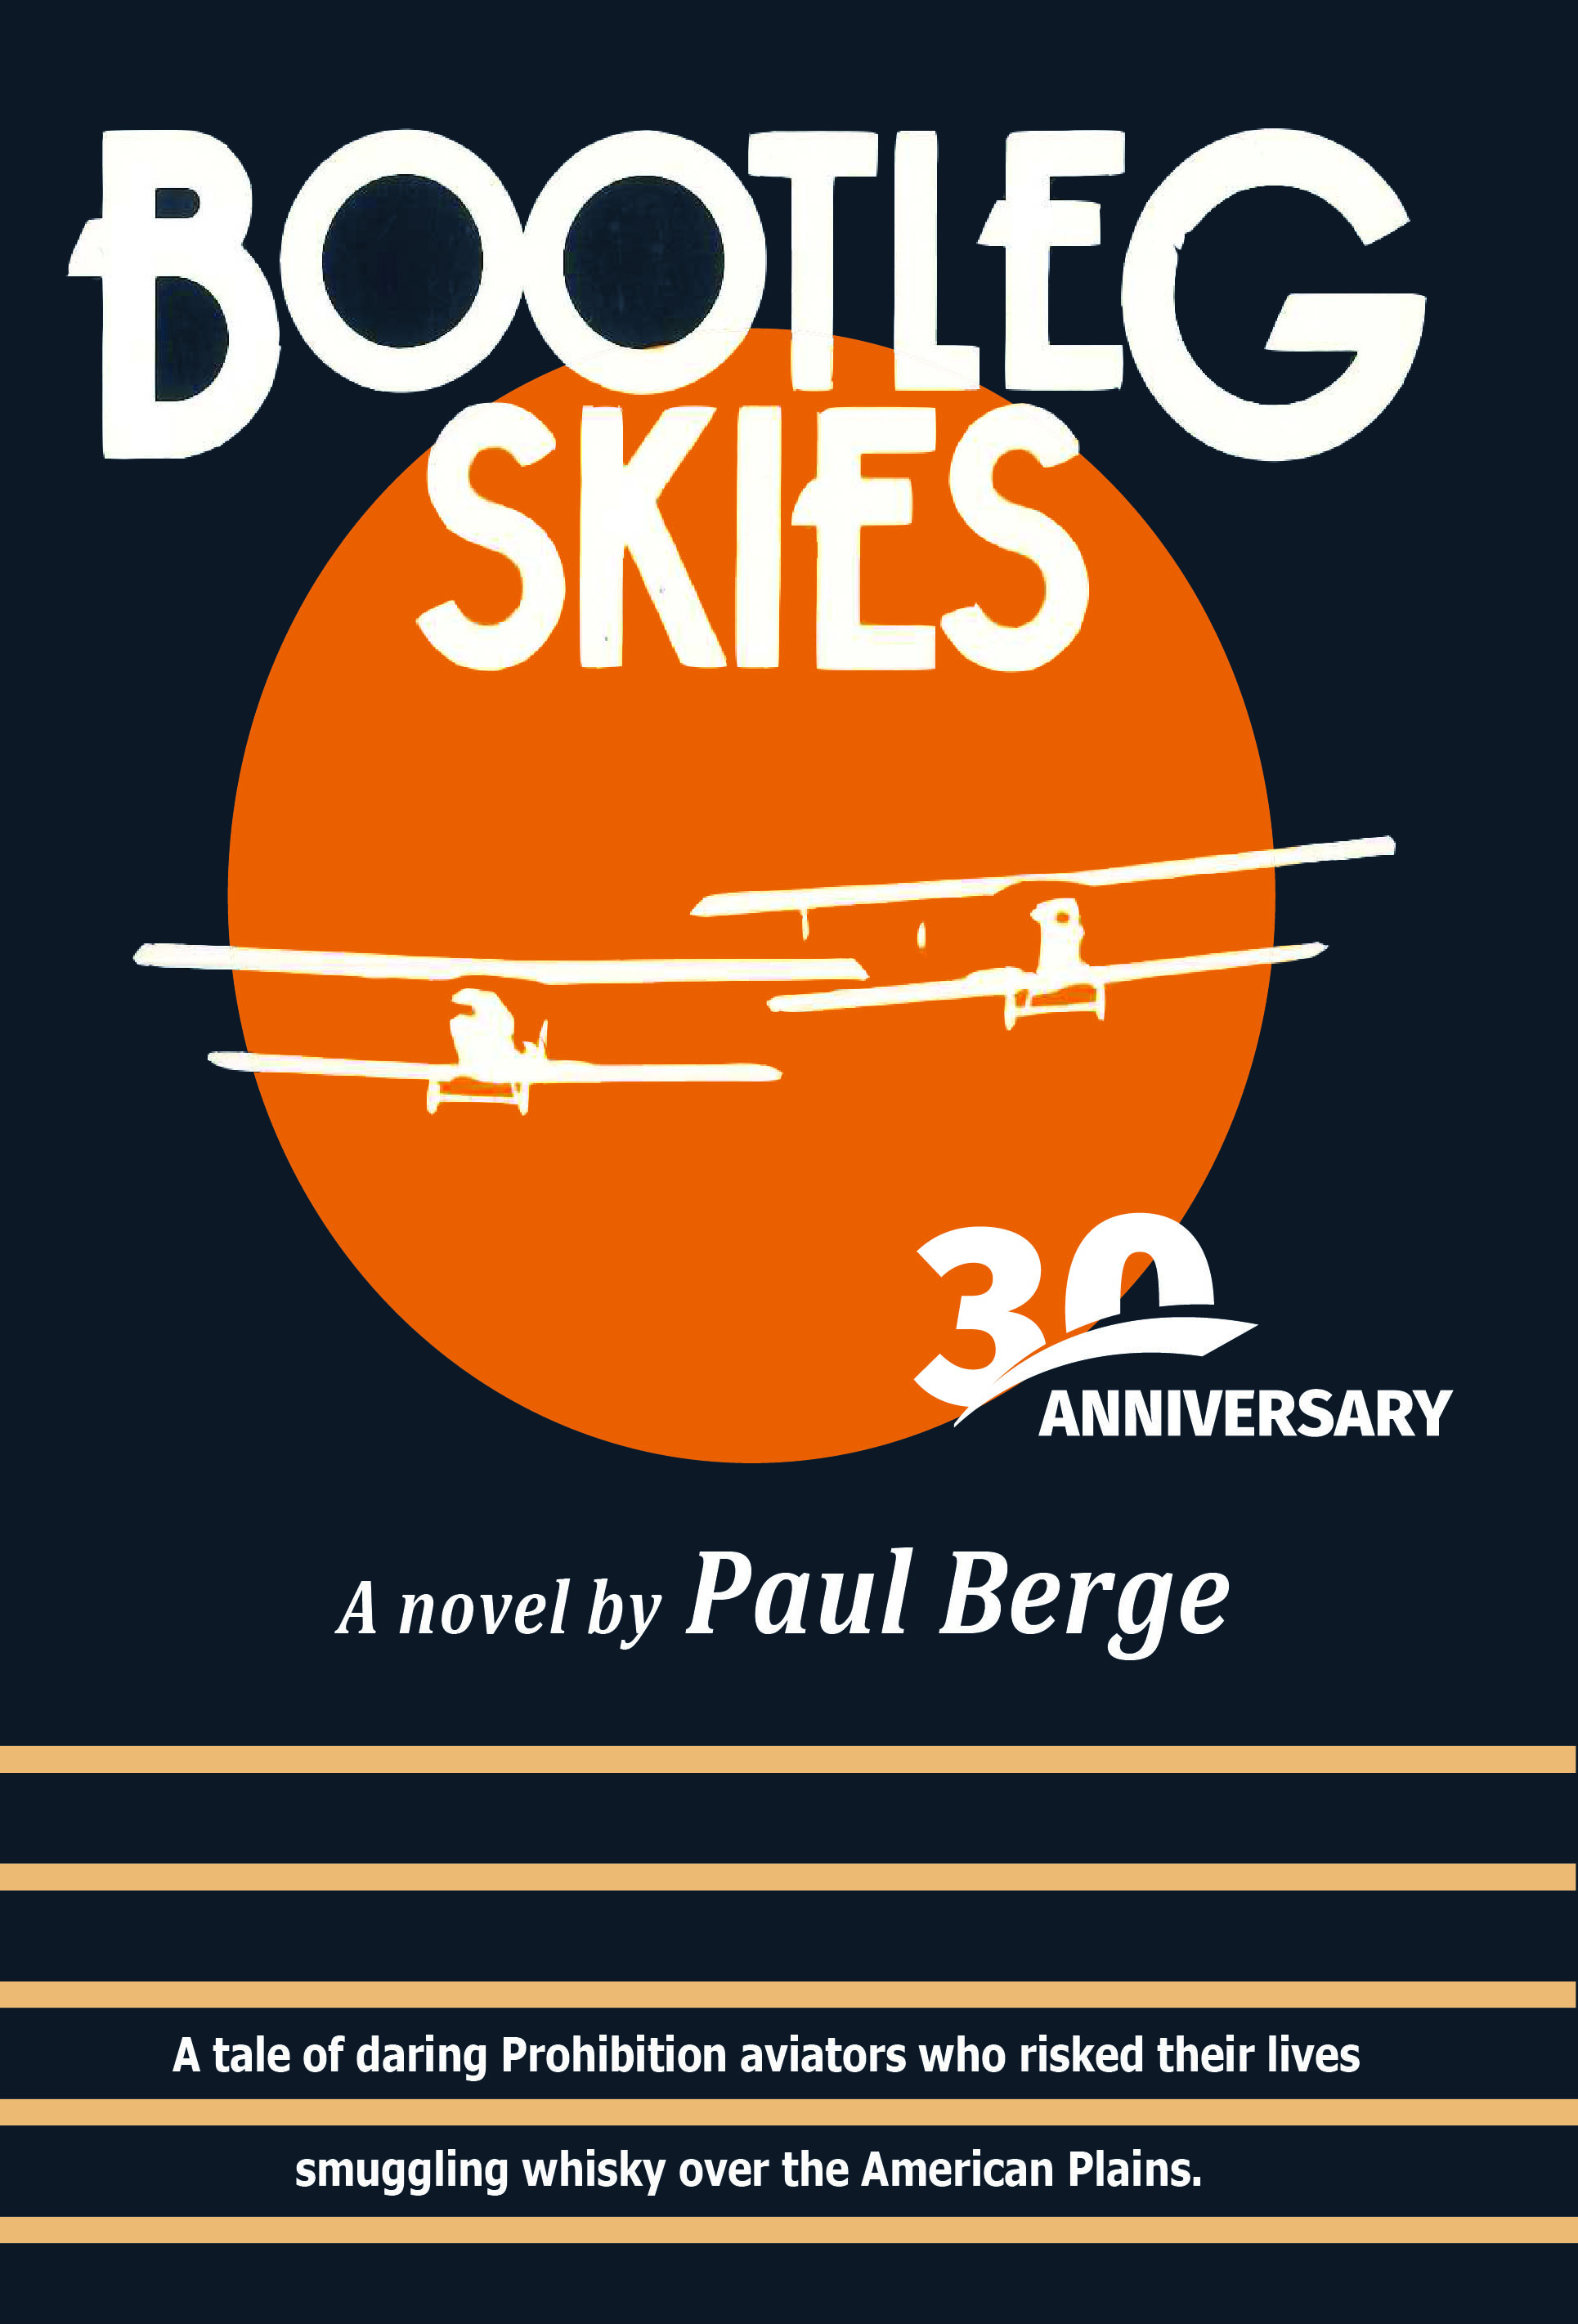 Bootleg Skies 30th Anniversary Edition